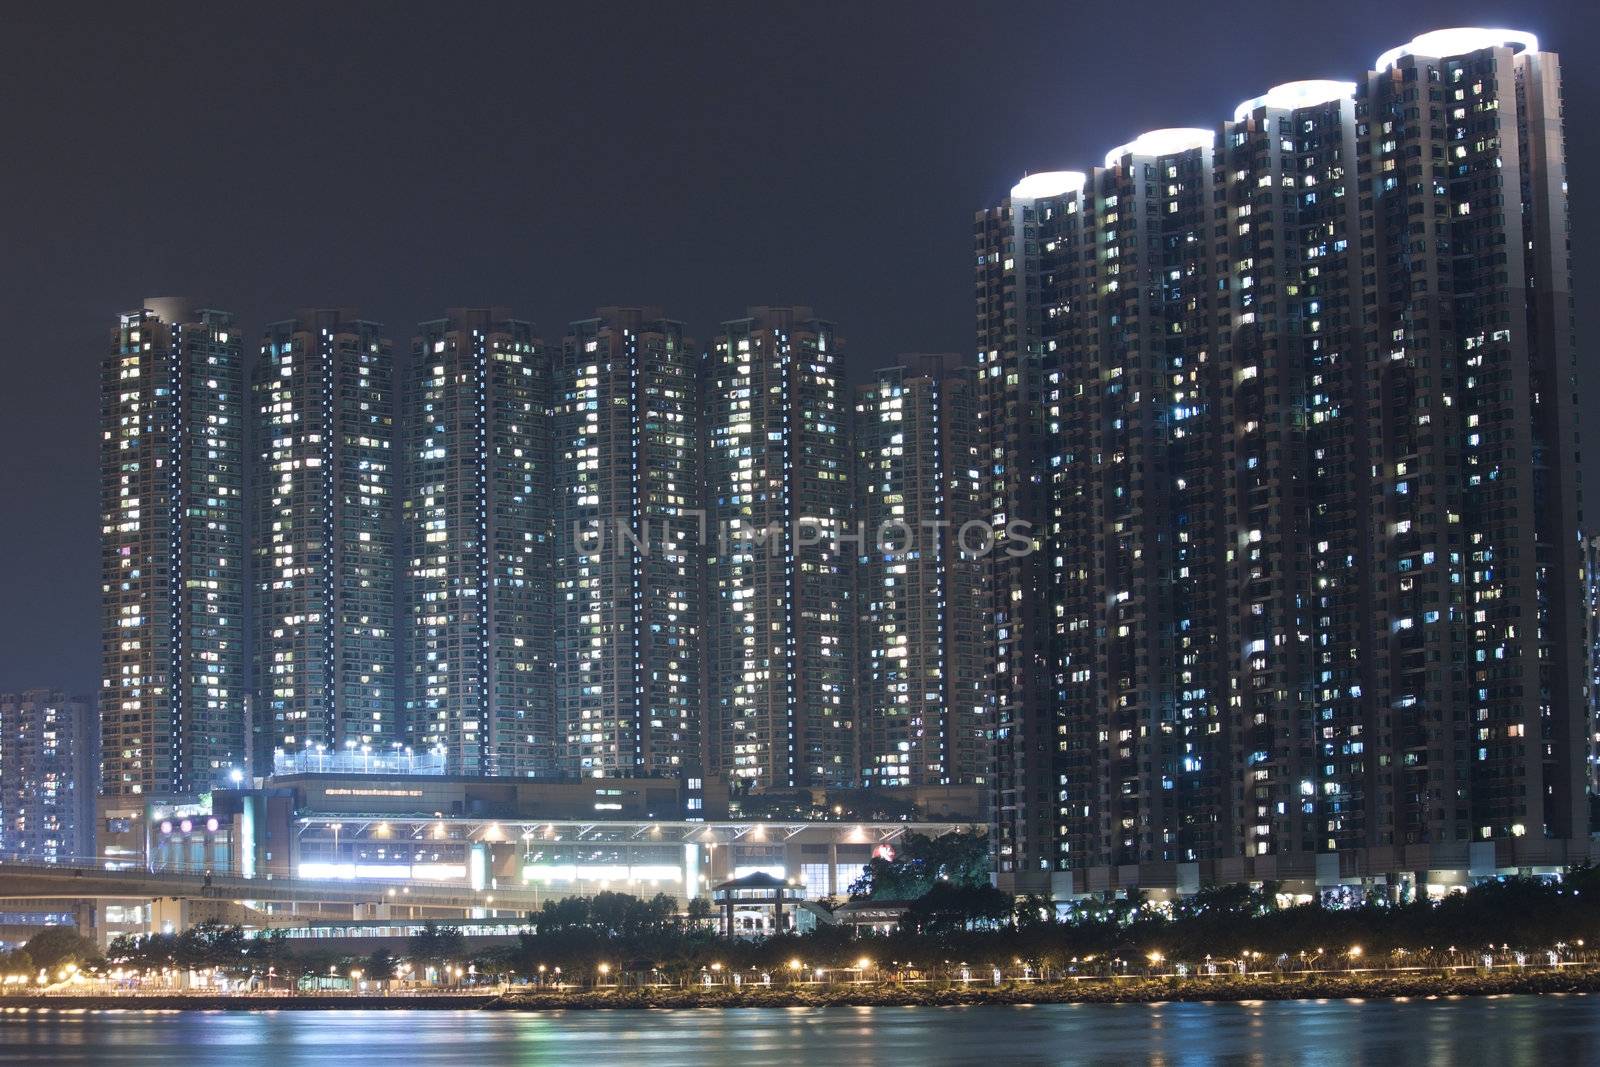 Hong Kong apartment blocks at night, showing the packed conditio by kawing921